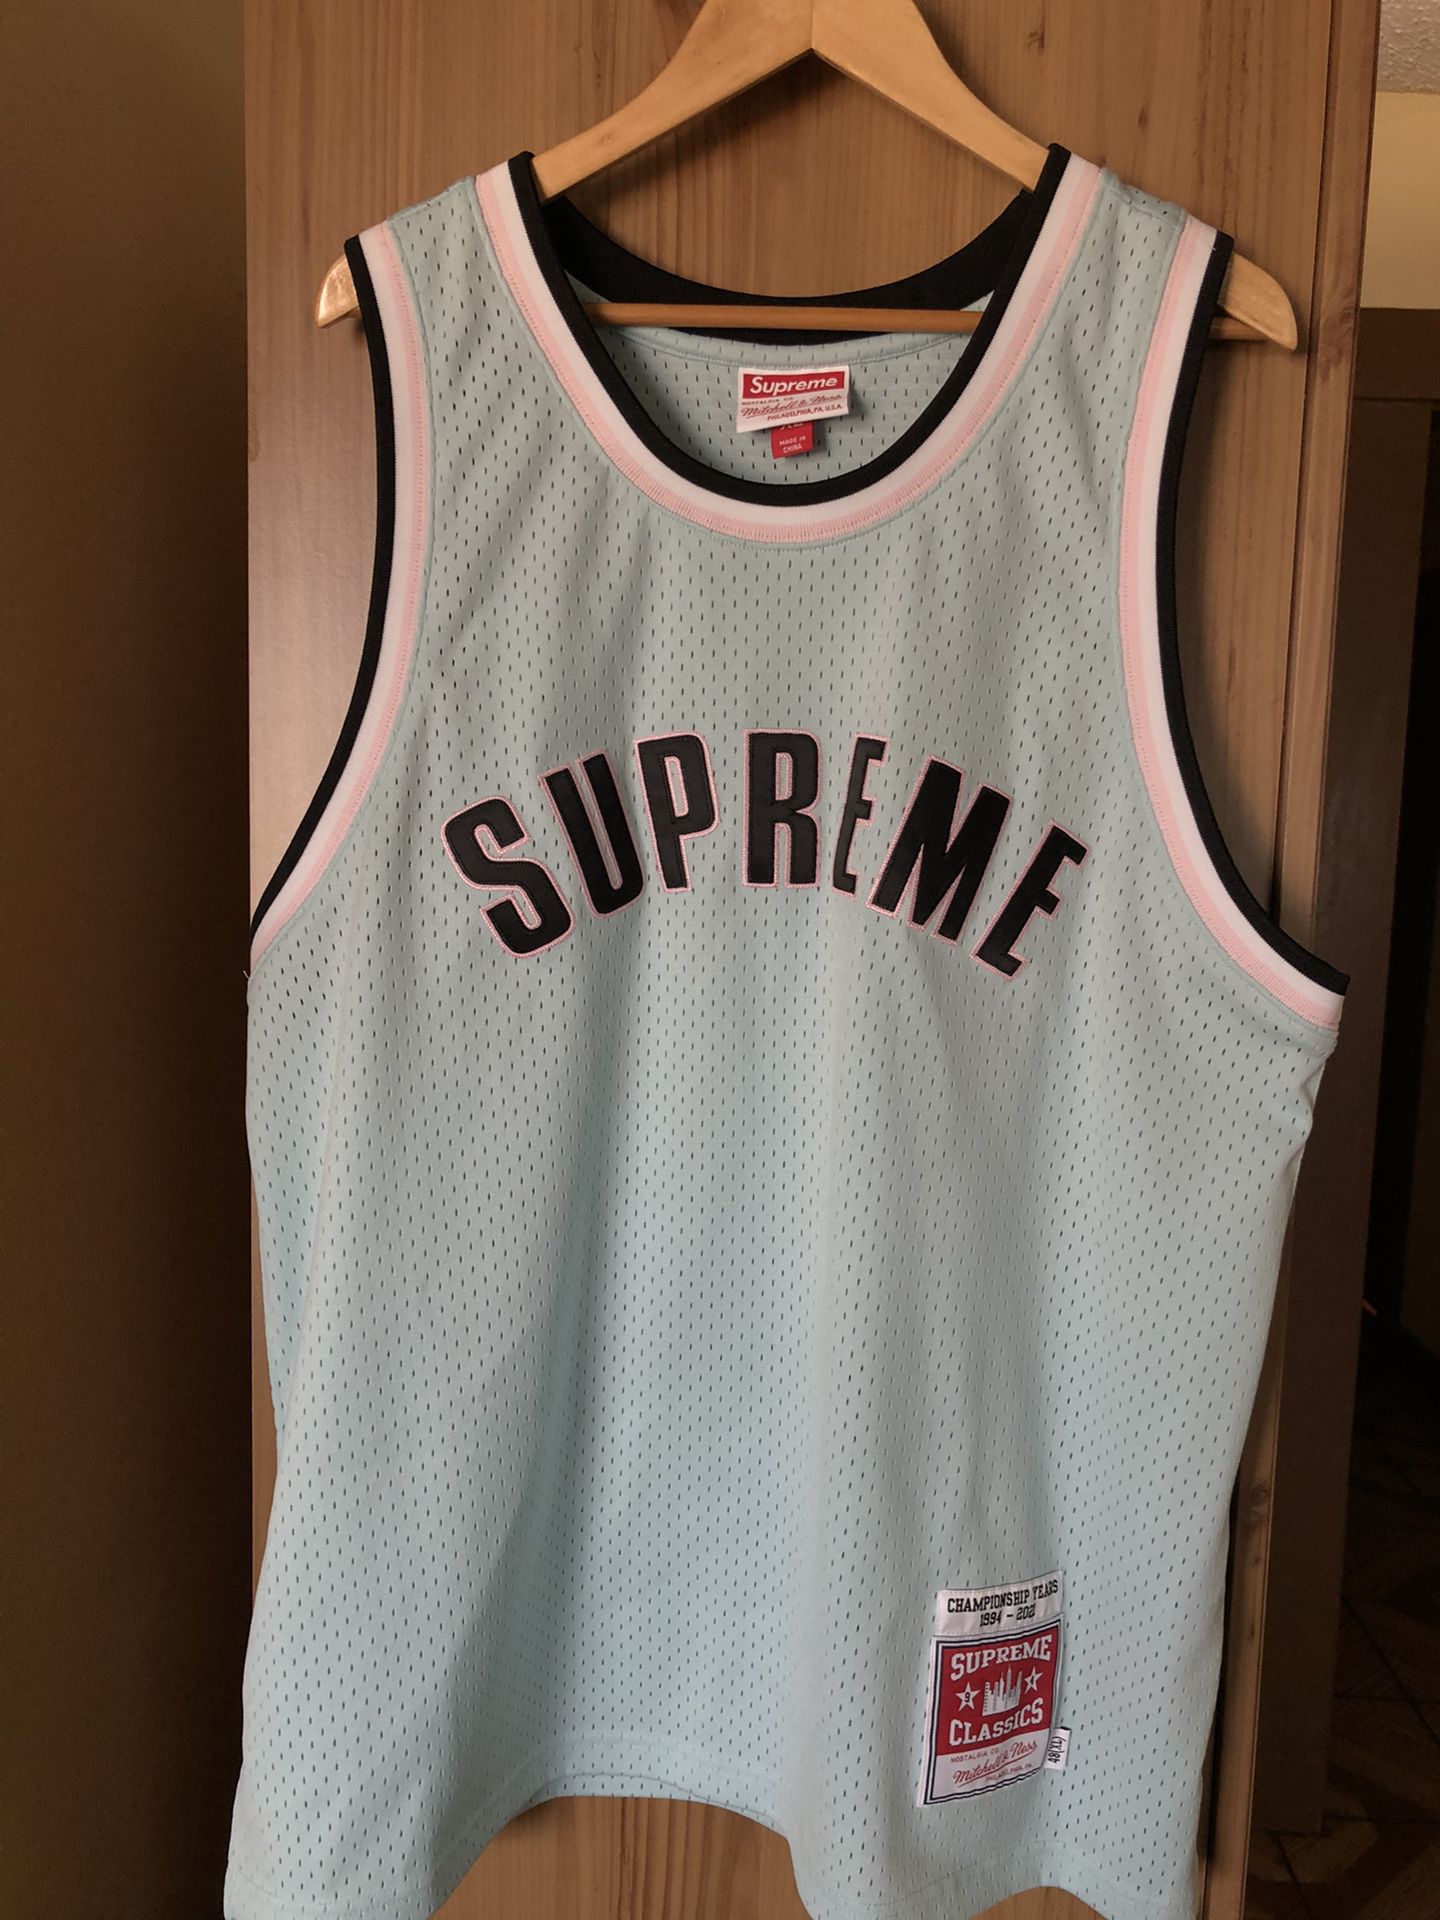 Supreme x Mitchell and Ness Men's Basketball Jersey